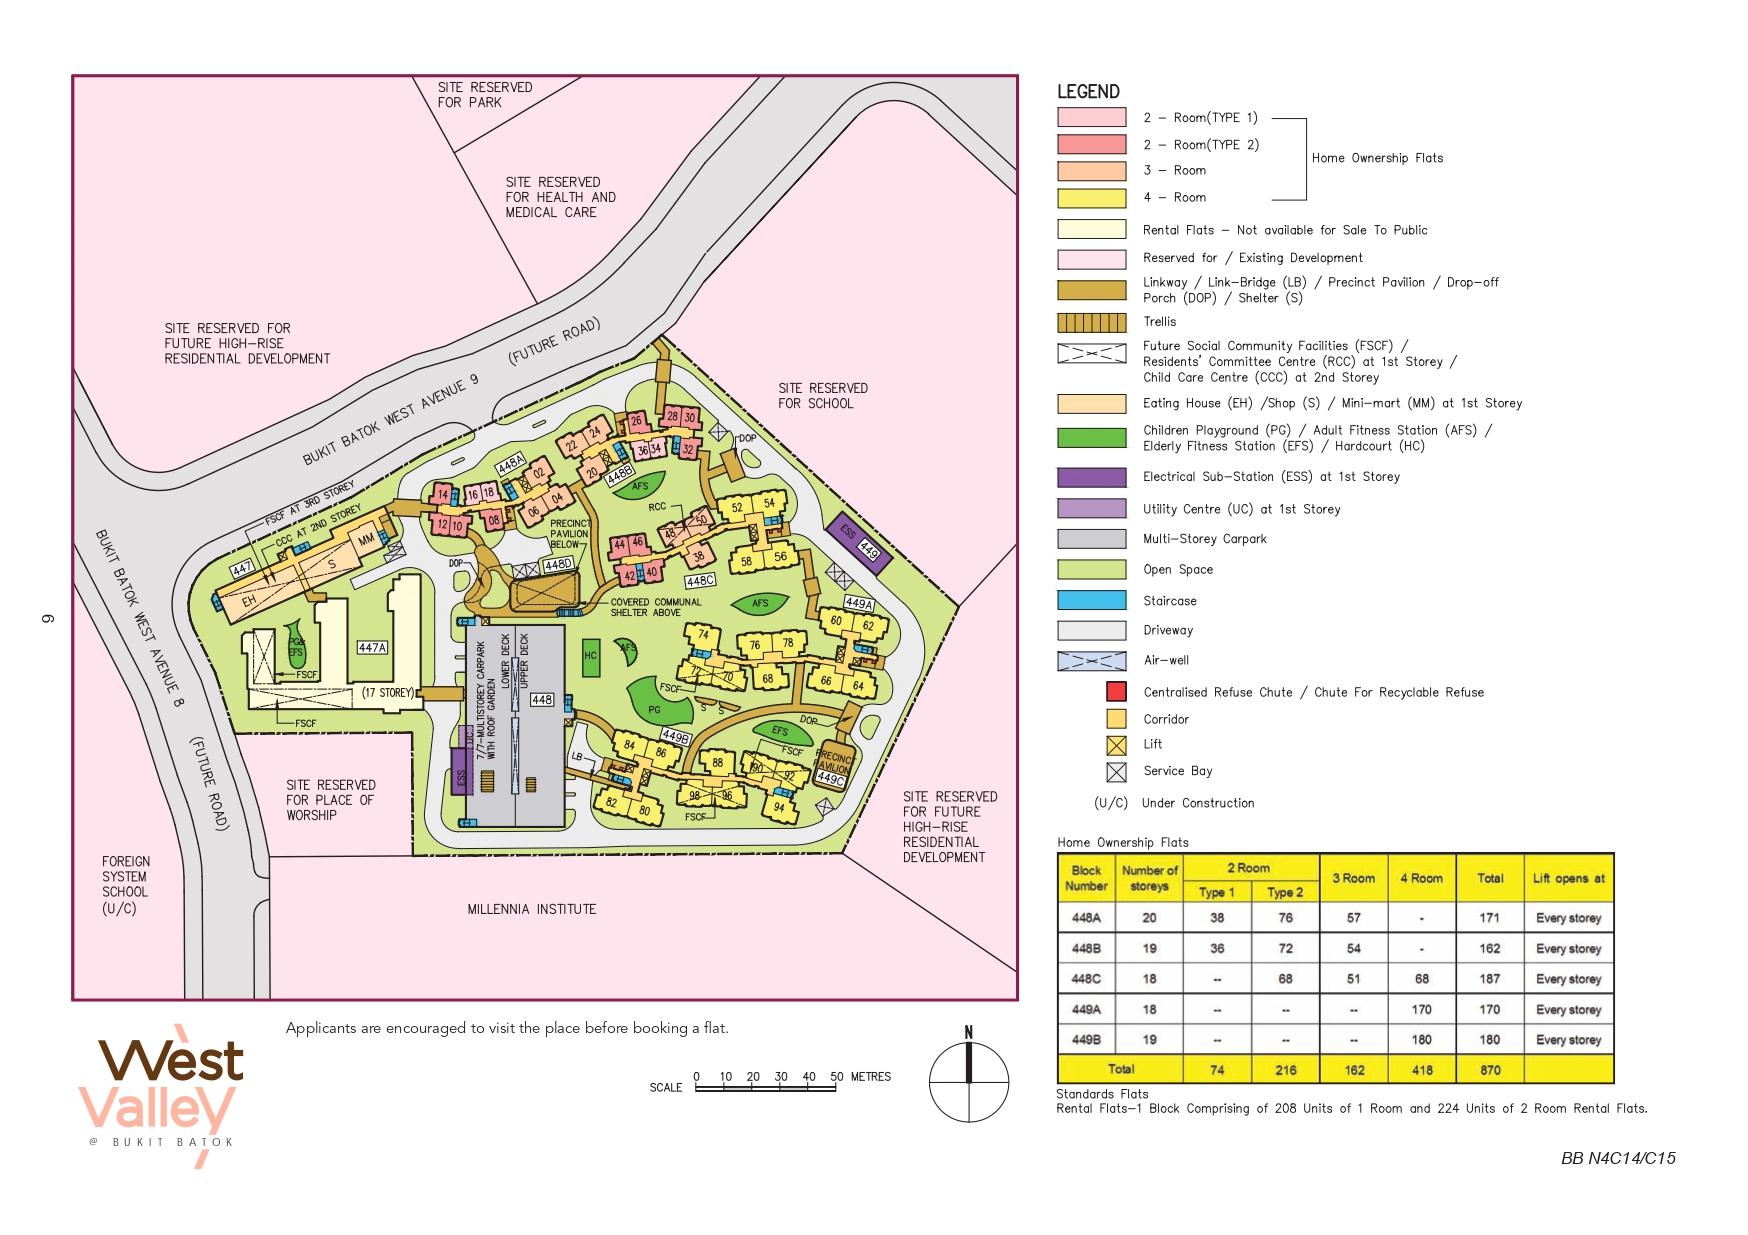 West Valley @ Bukit Batok site-plan